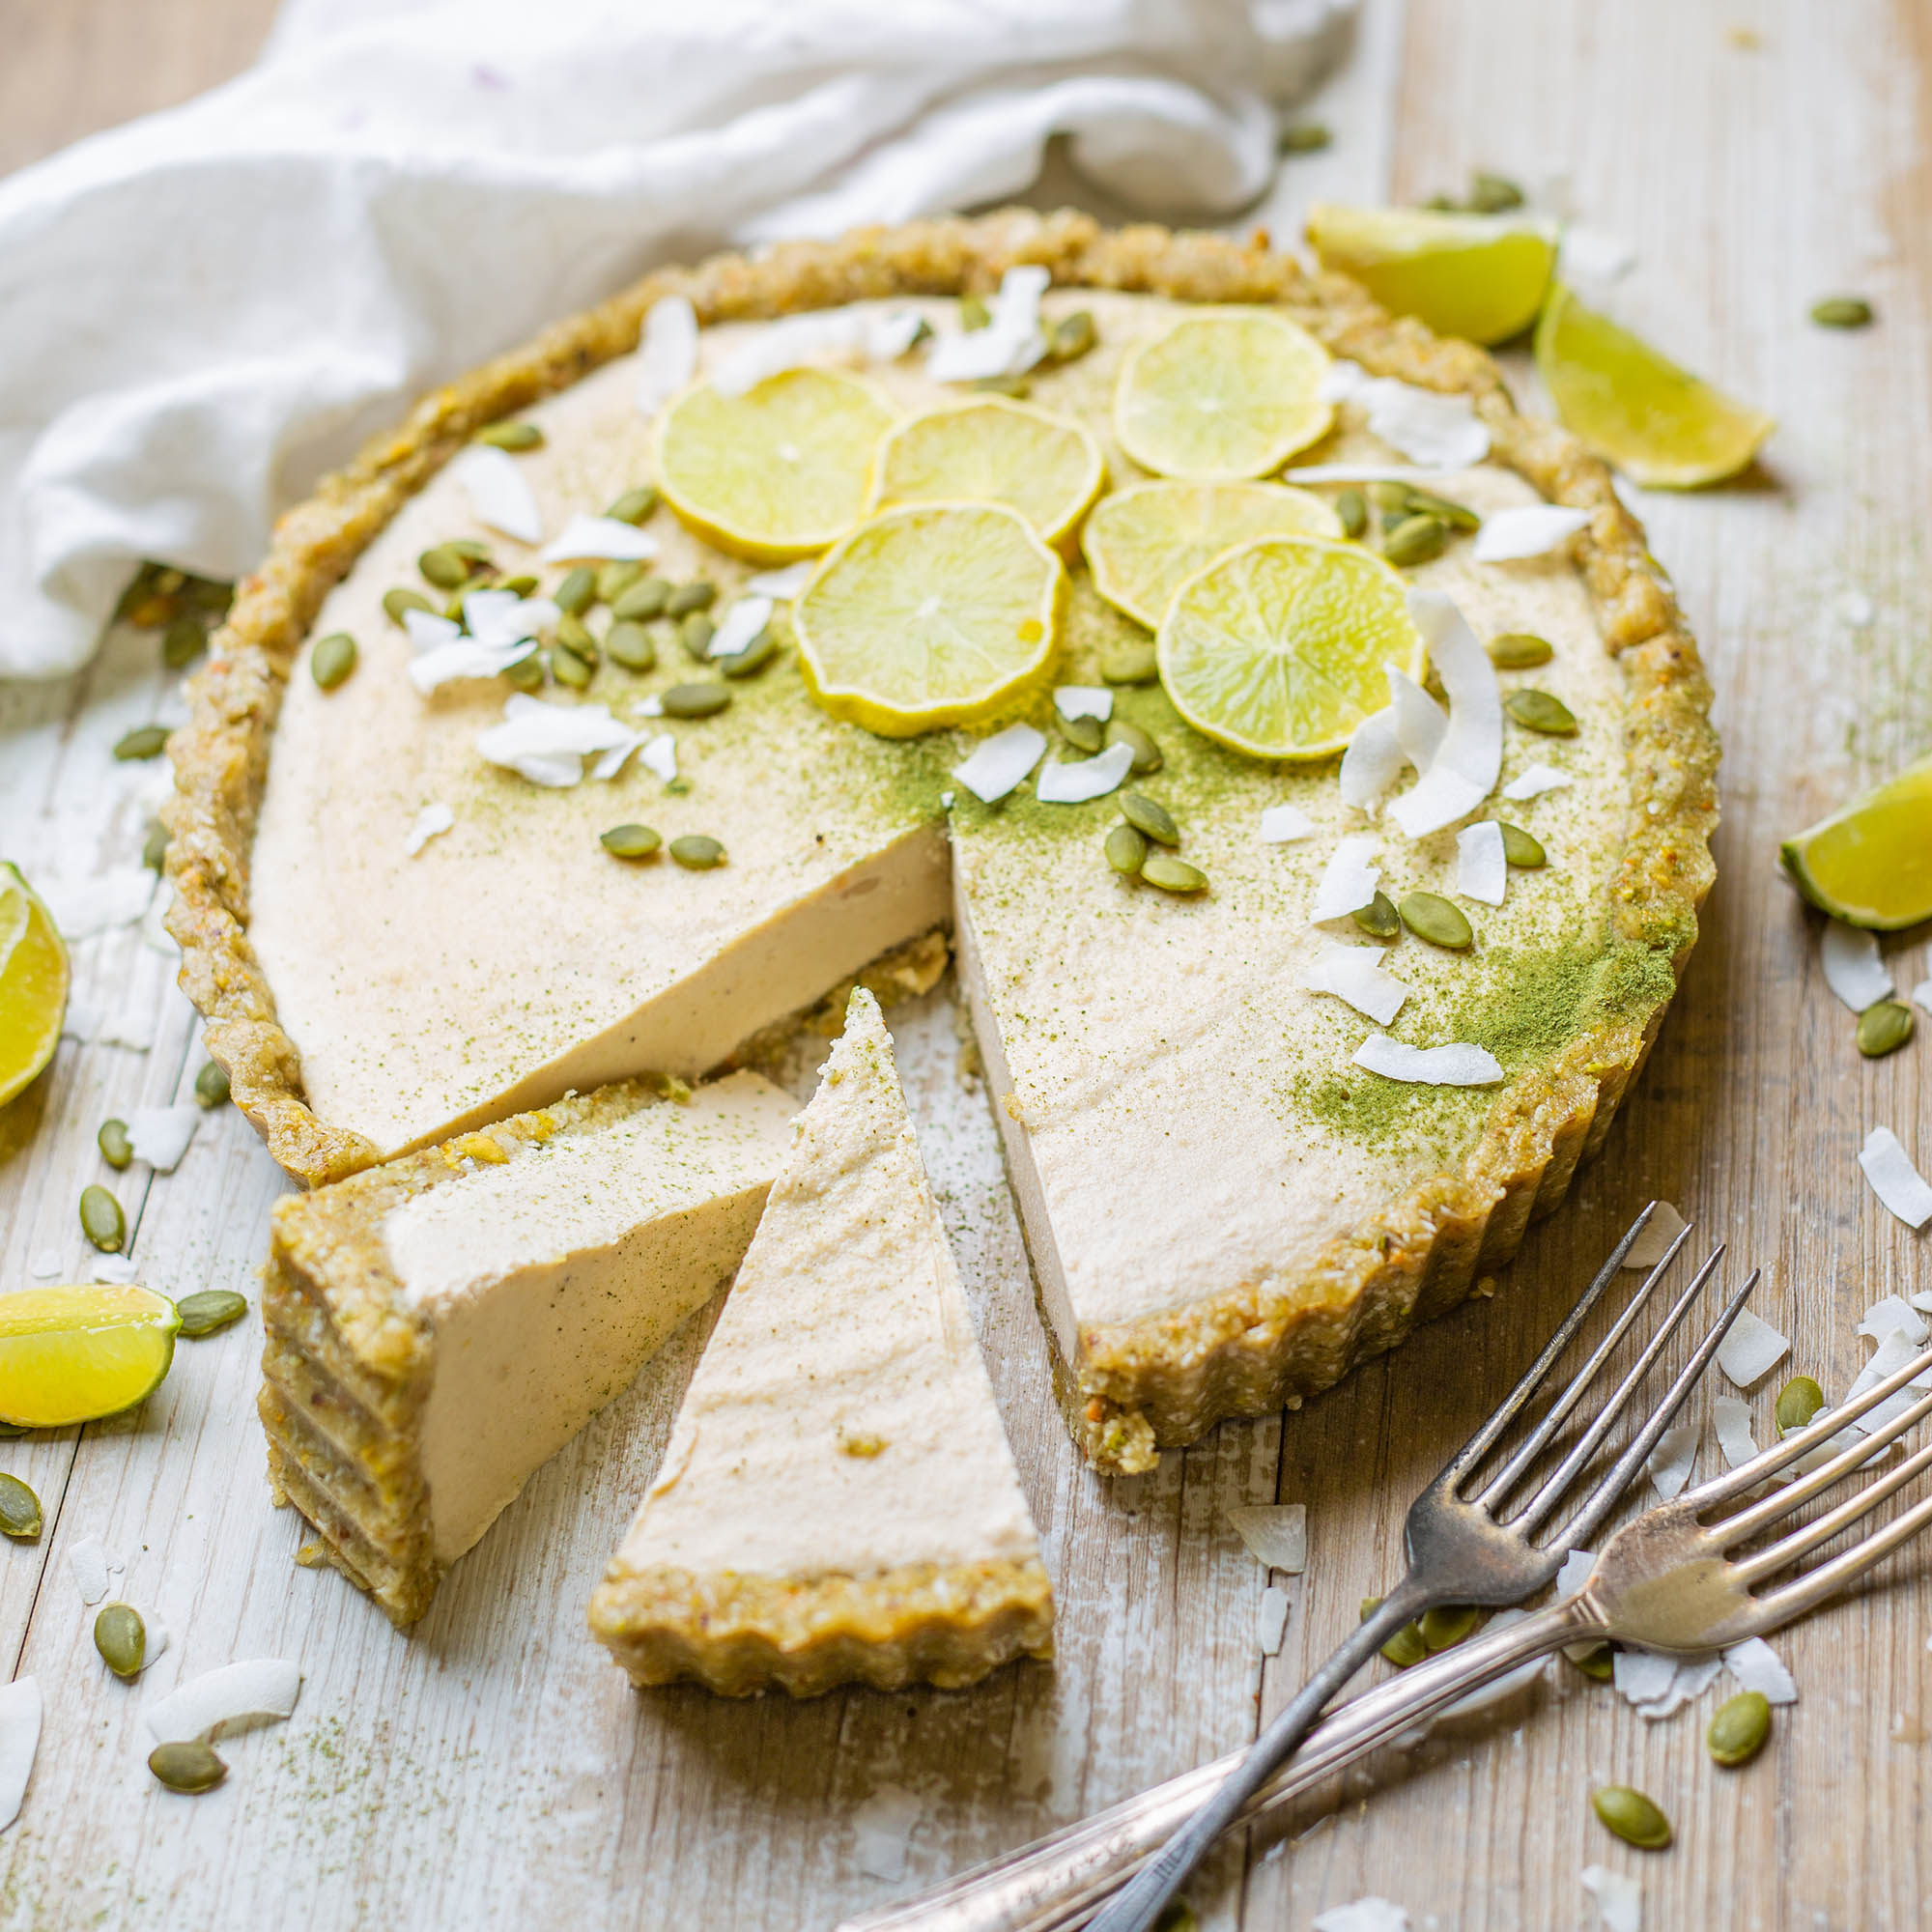 Vegan No Bake Key Lime Pie – No Refined Sugar